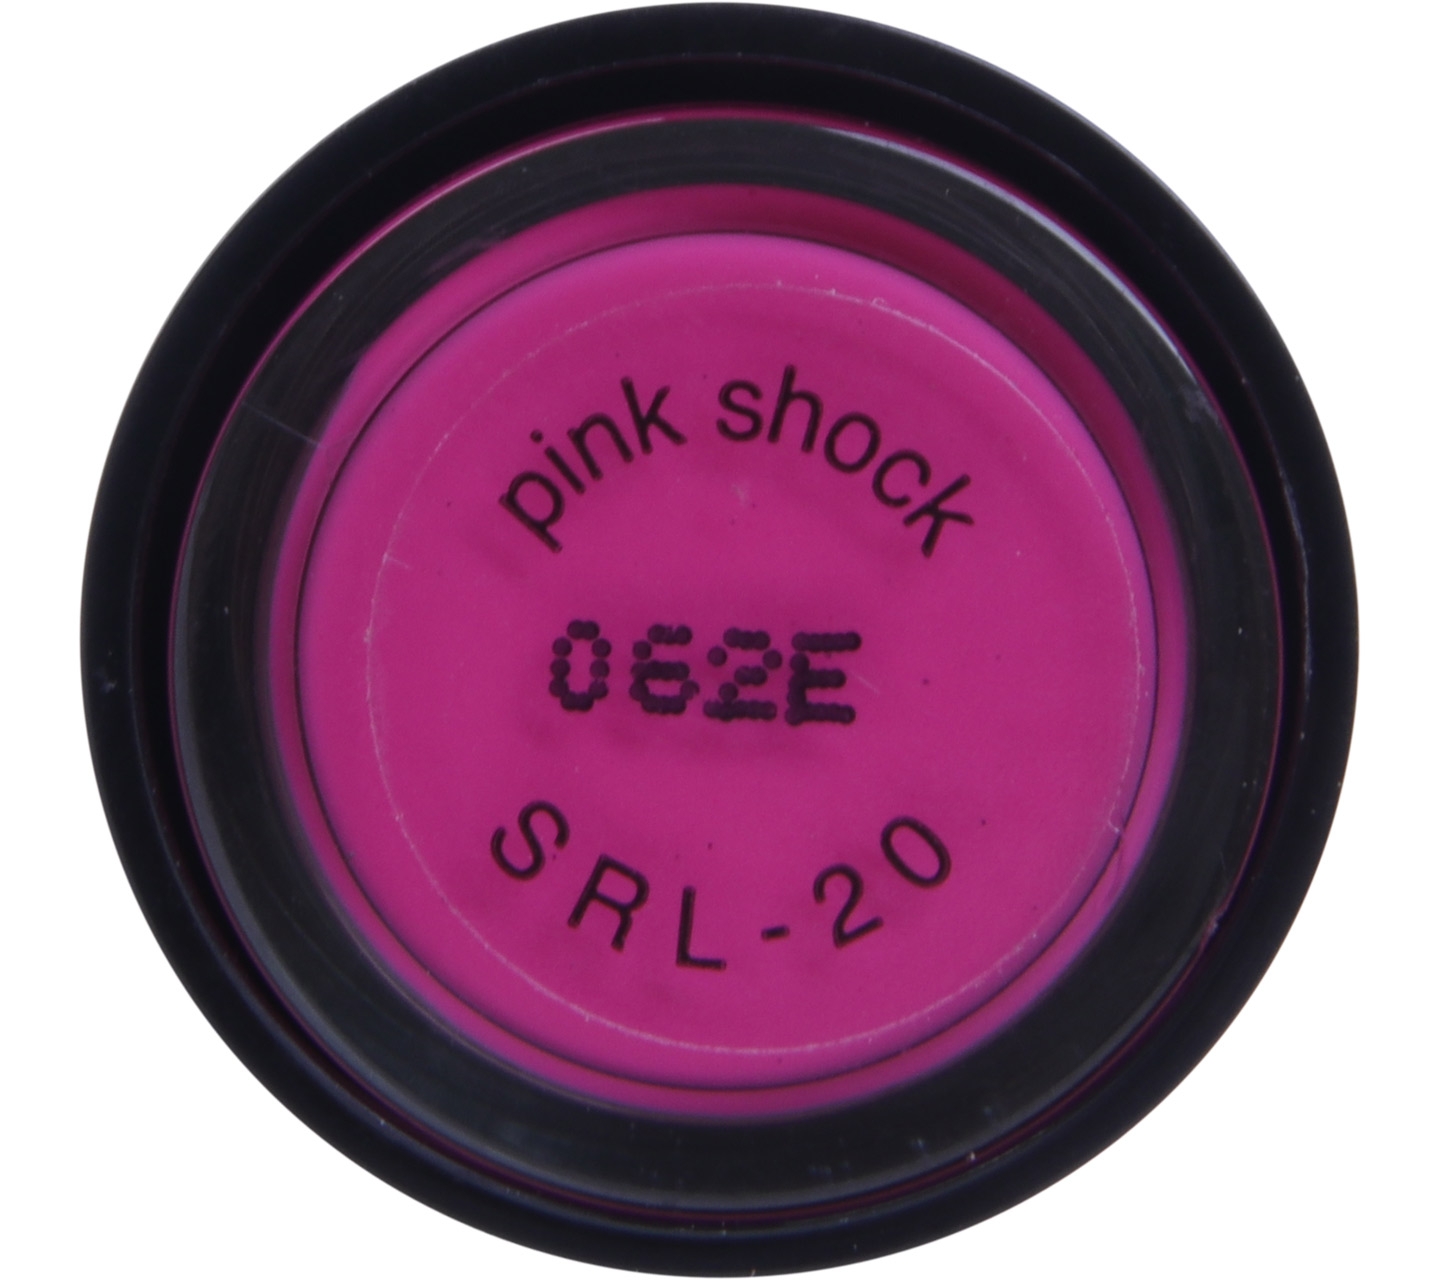 Studio Make Up Pink Shock Lips